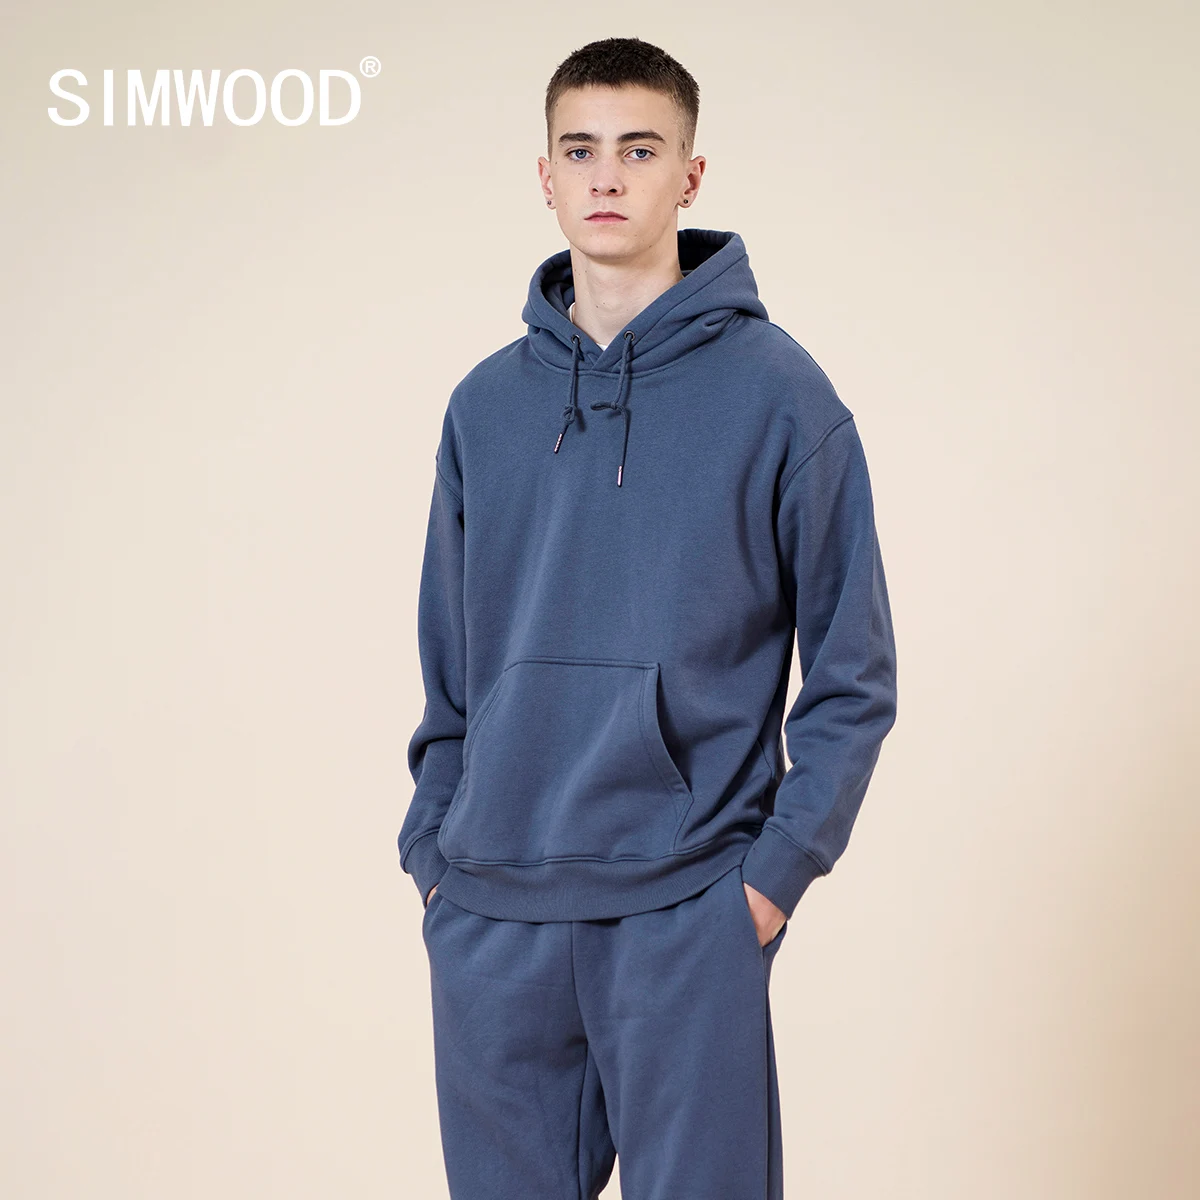 

Simwood 390g Heavyweight Thick Hooded Sweatshirt Men 2020 Autumn Winter Warm Fleece Jogger Hoodies 13 Colors Pullovers Unisex, Customized color